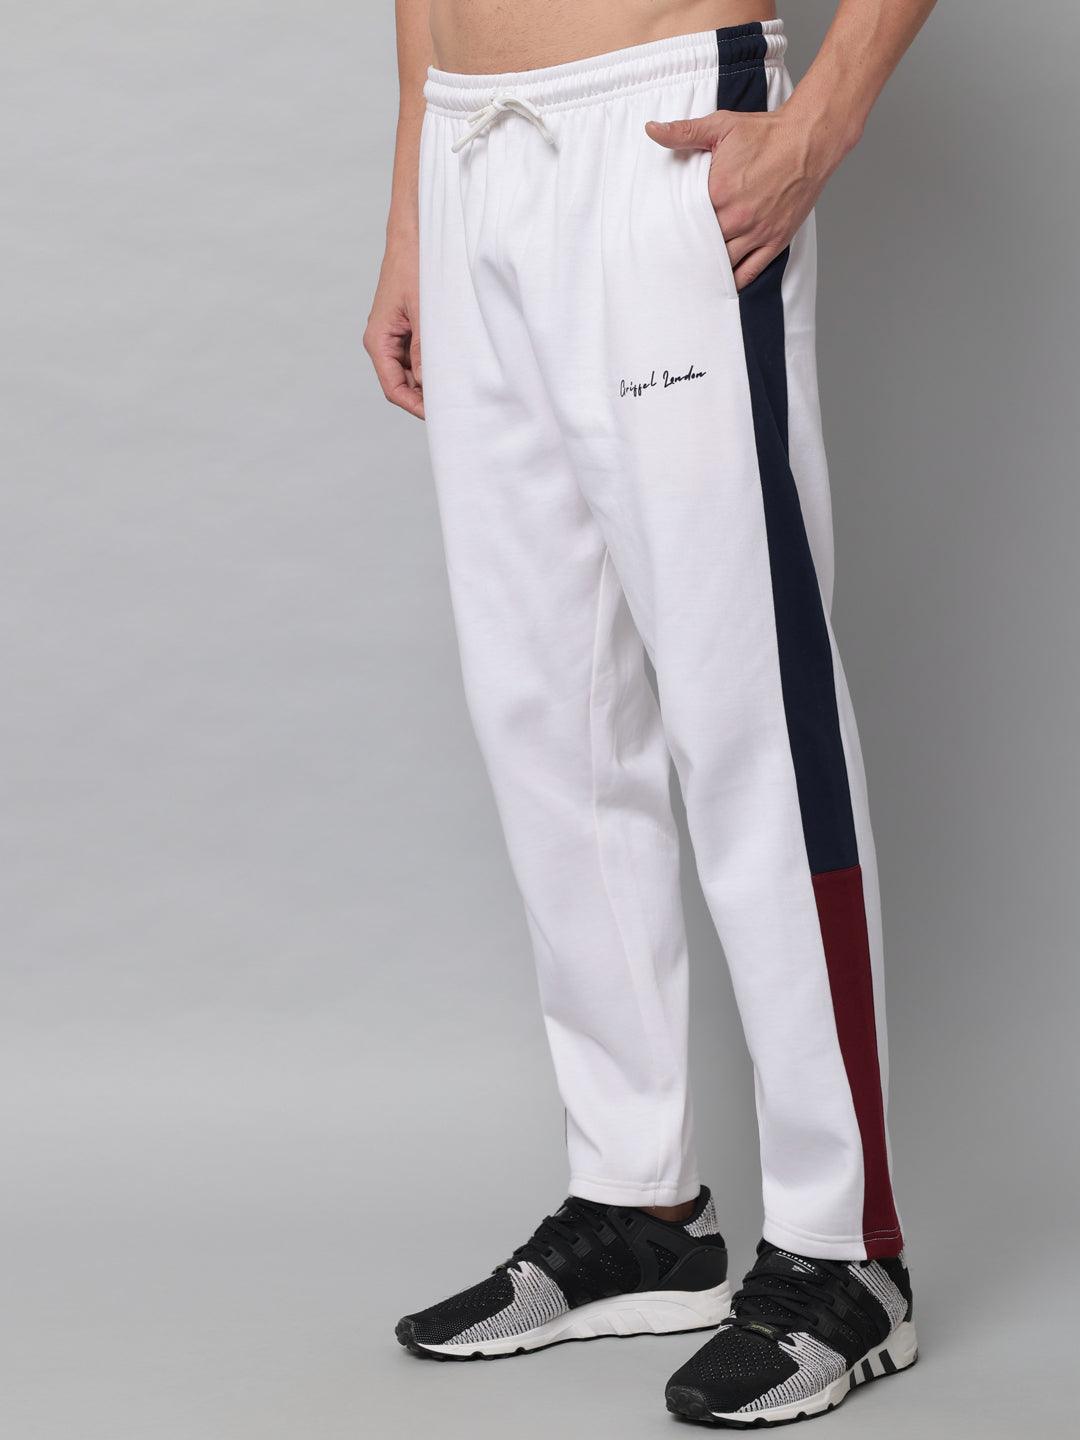 GRIFFEL Men Fleece Basic Solid Front Logo White Trackpants - griffel